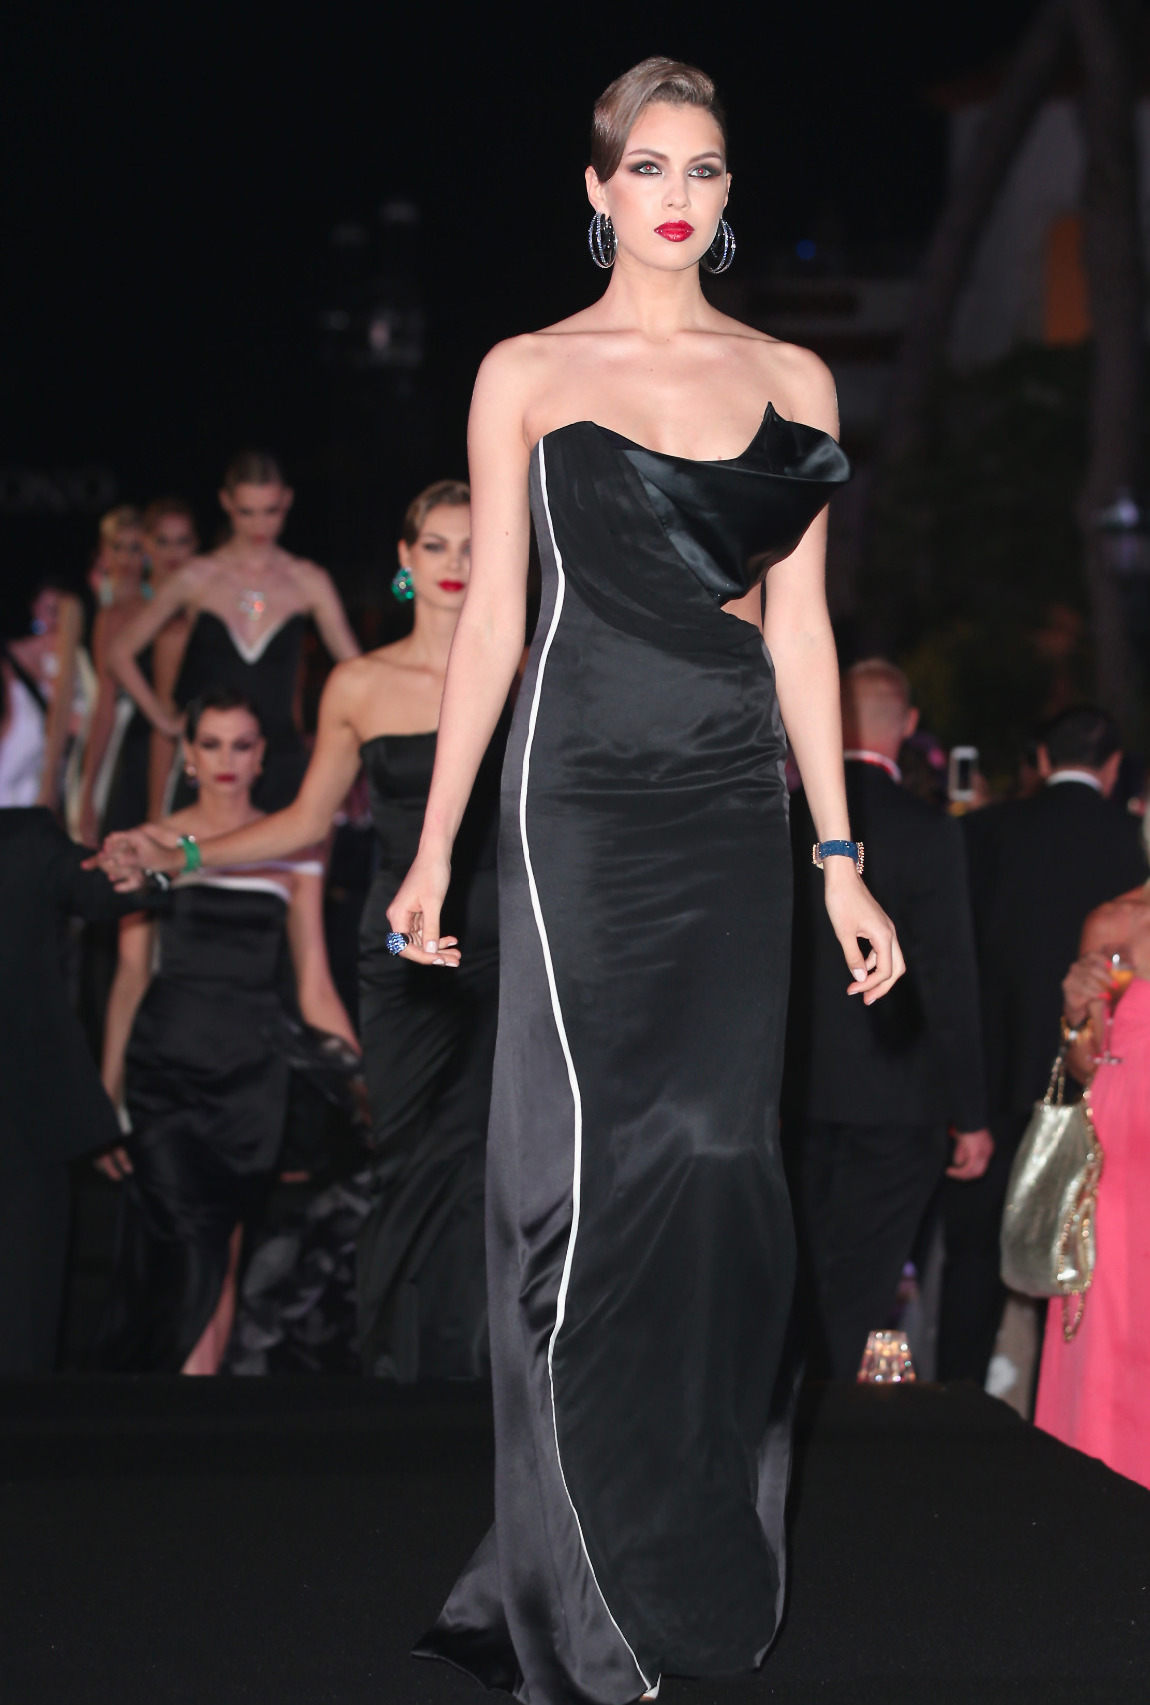  A model walking on the Cannes 2015 Gyunel catwalk 